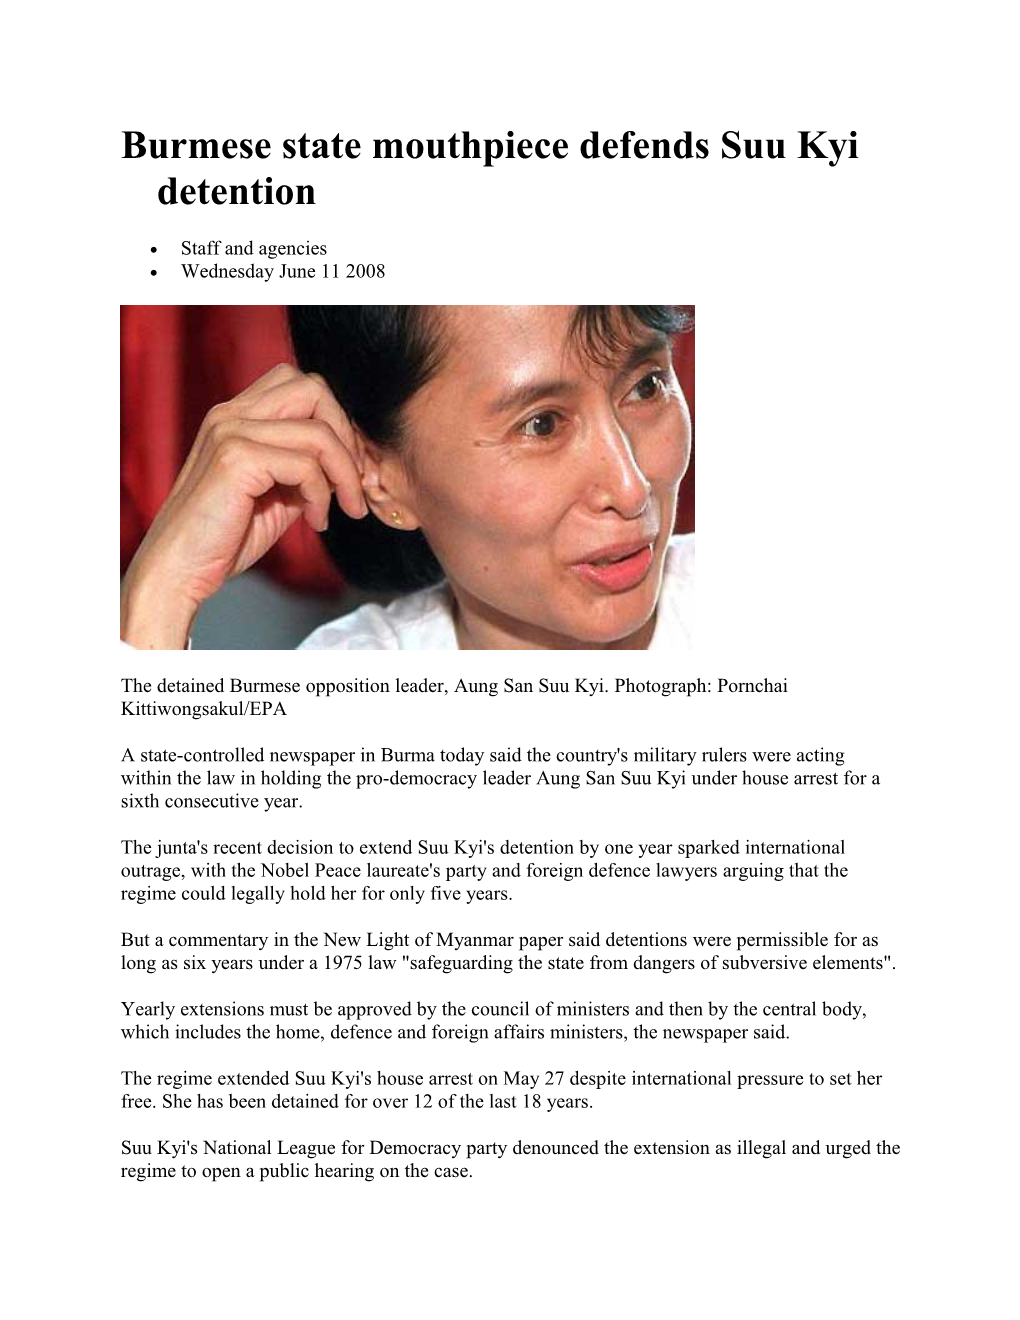 Burmese State Mouthpiece Defends Suu Kyi Detention